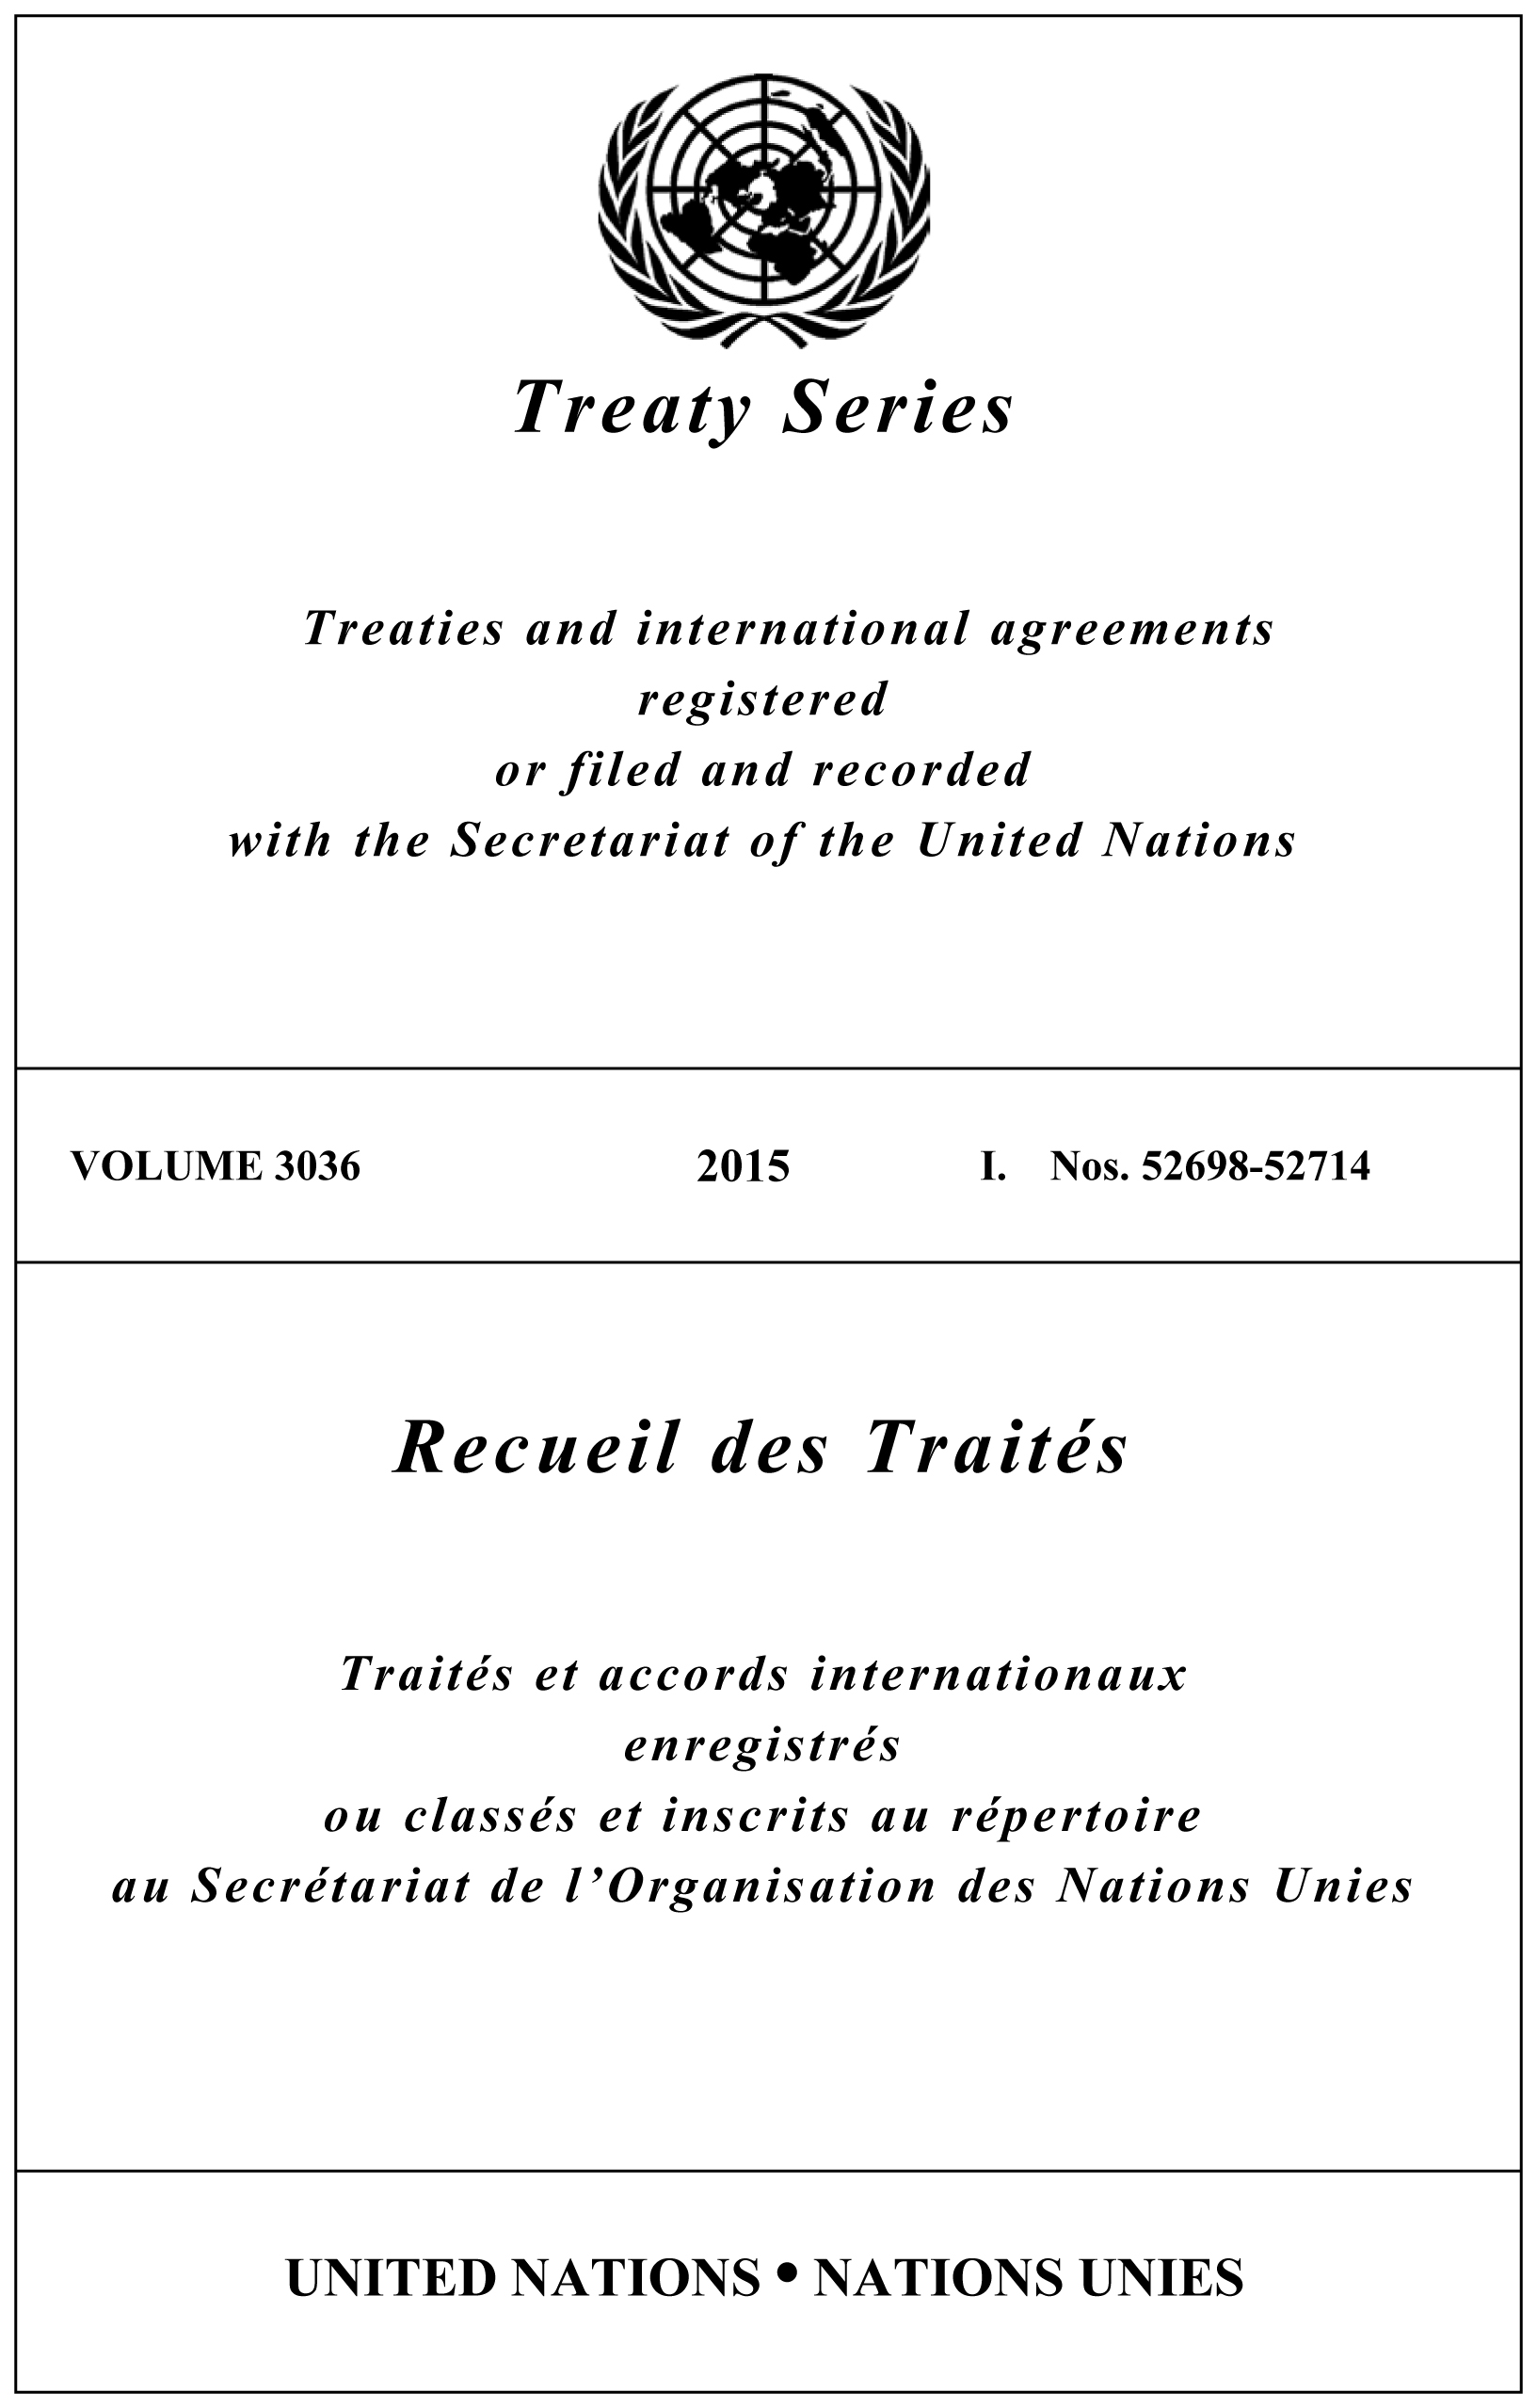 image of Treaty Series 3036